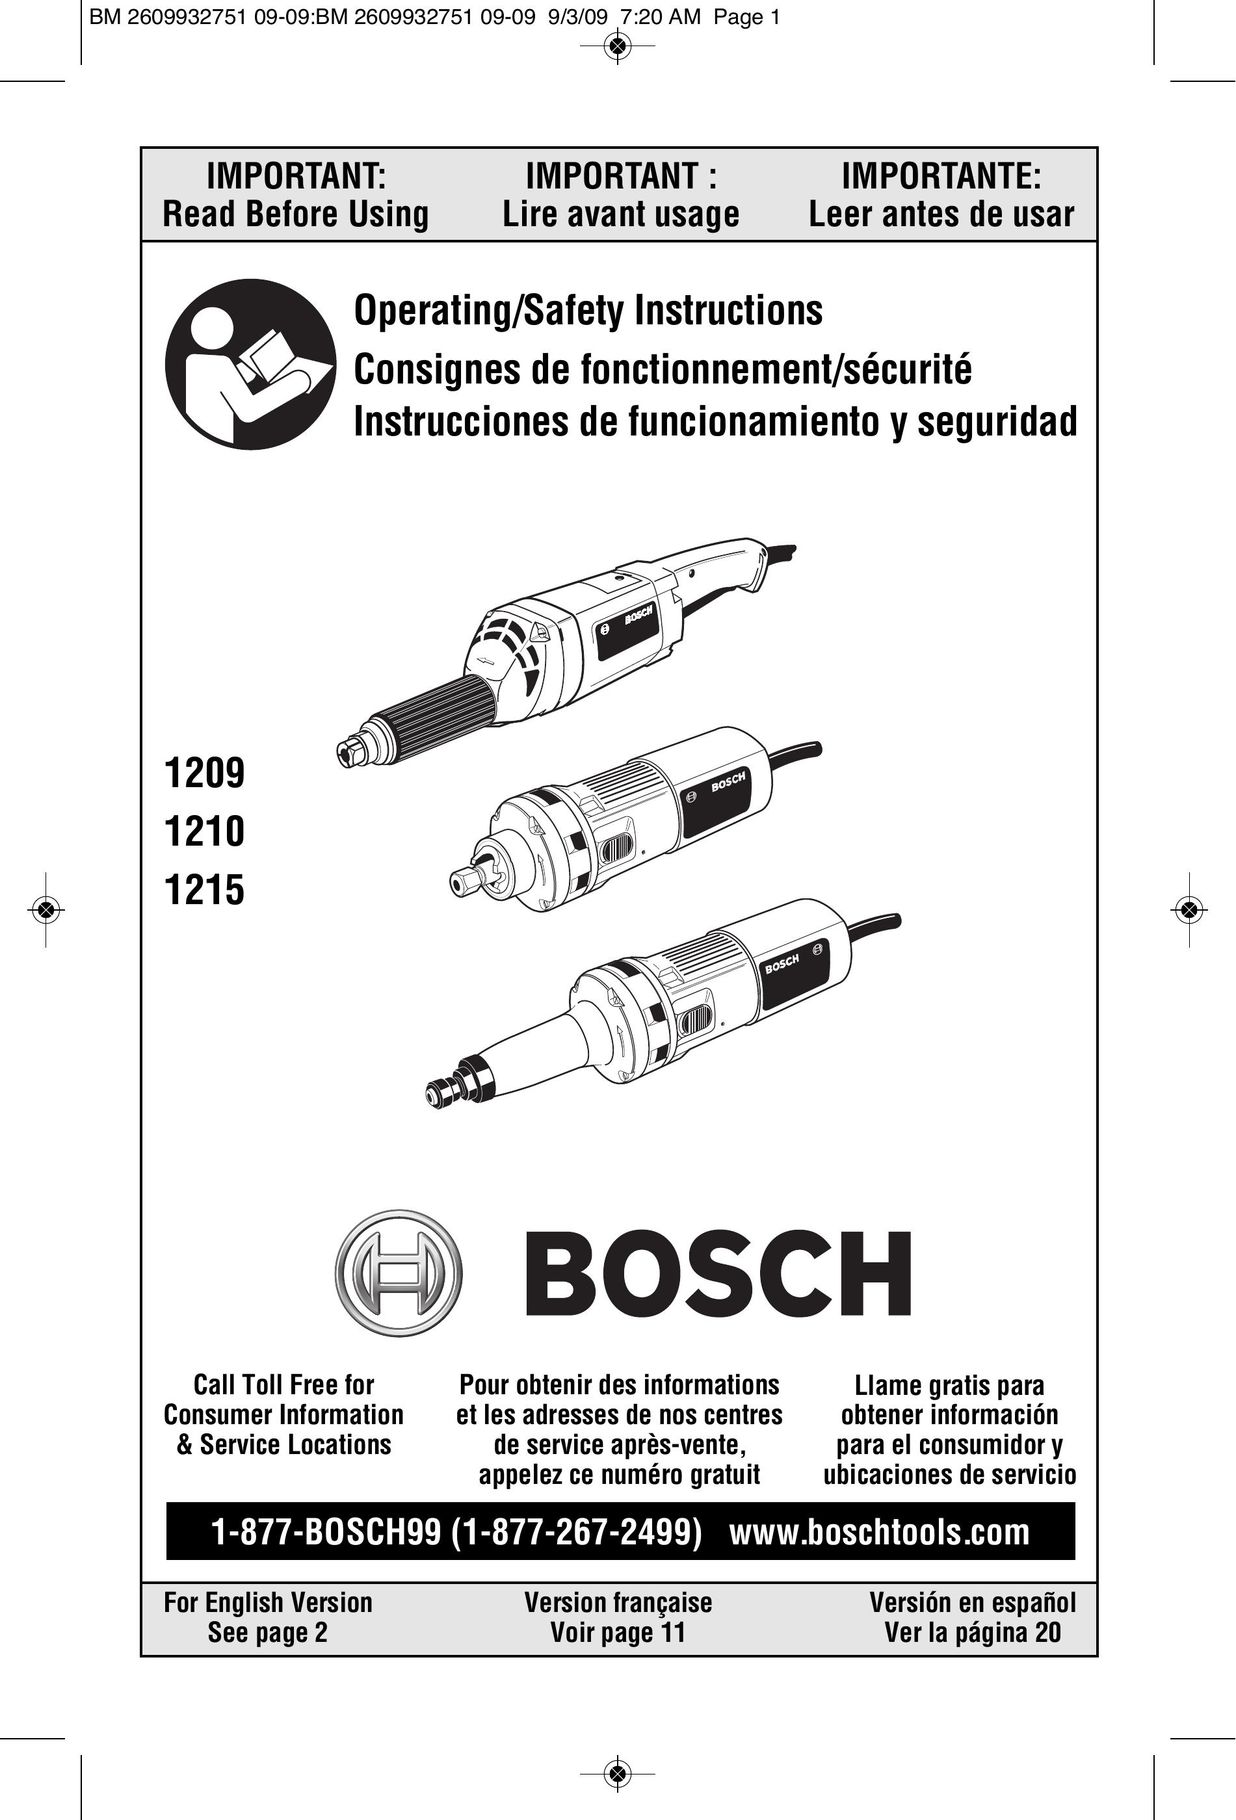 Bosch Power Tools 1209 Grinder User Manual